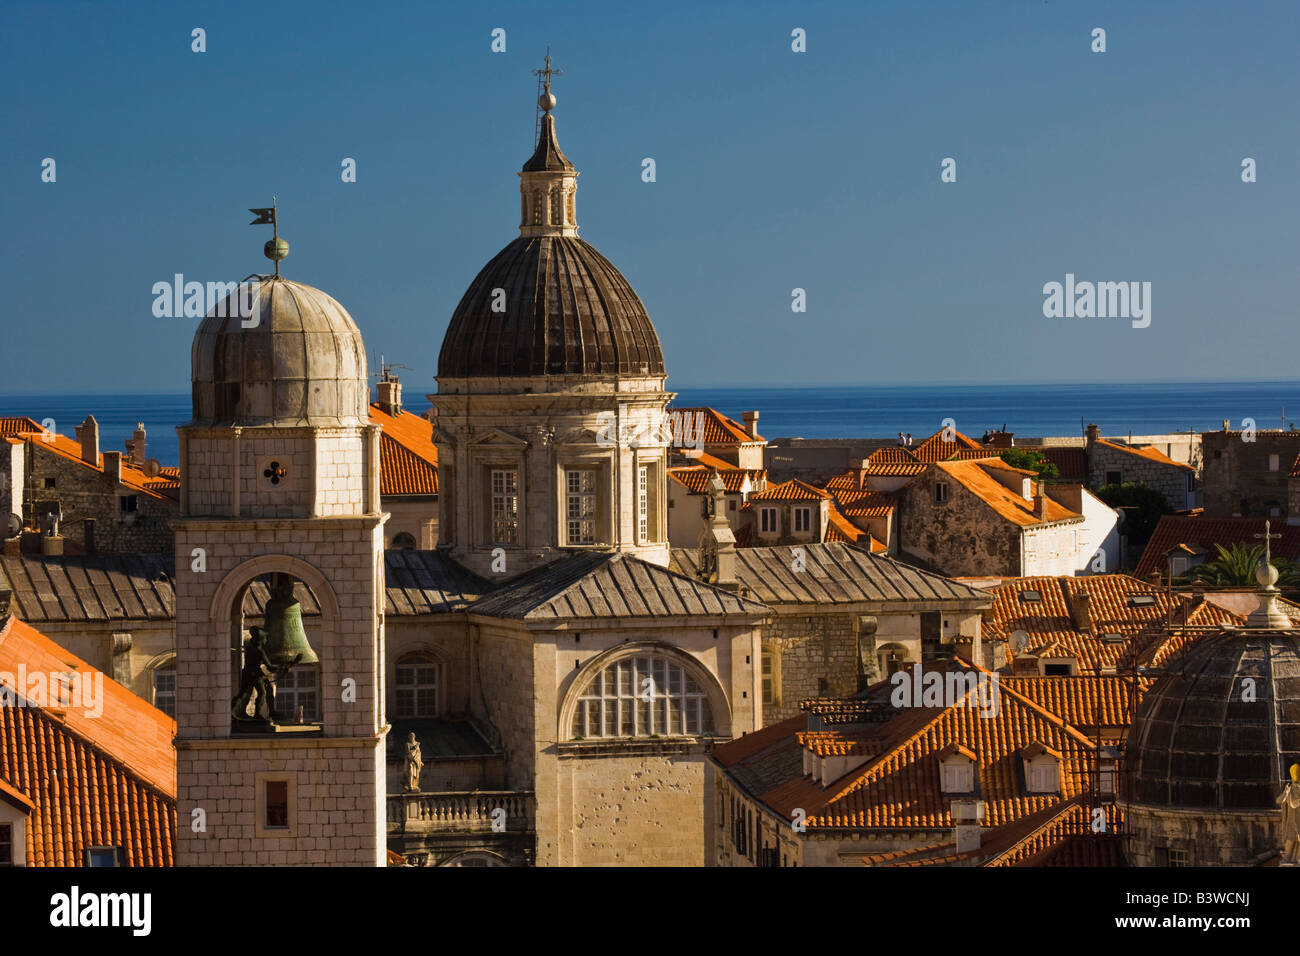 St. Blaise church, and distant Adriatic Sea, Dubrovnik, Croatia a UNESCO World Heritage Site. Stock Photo